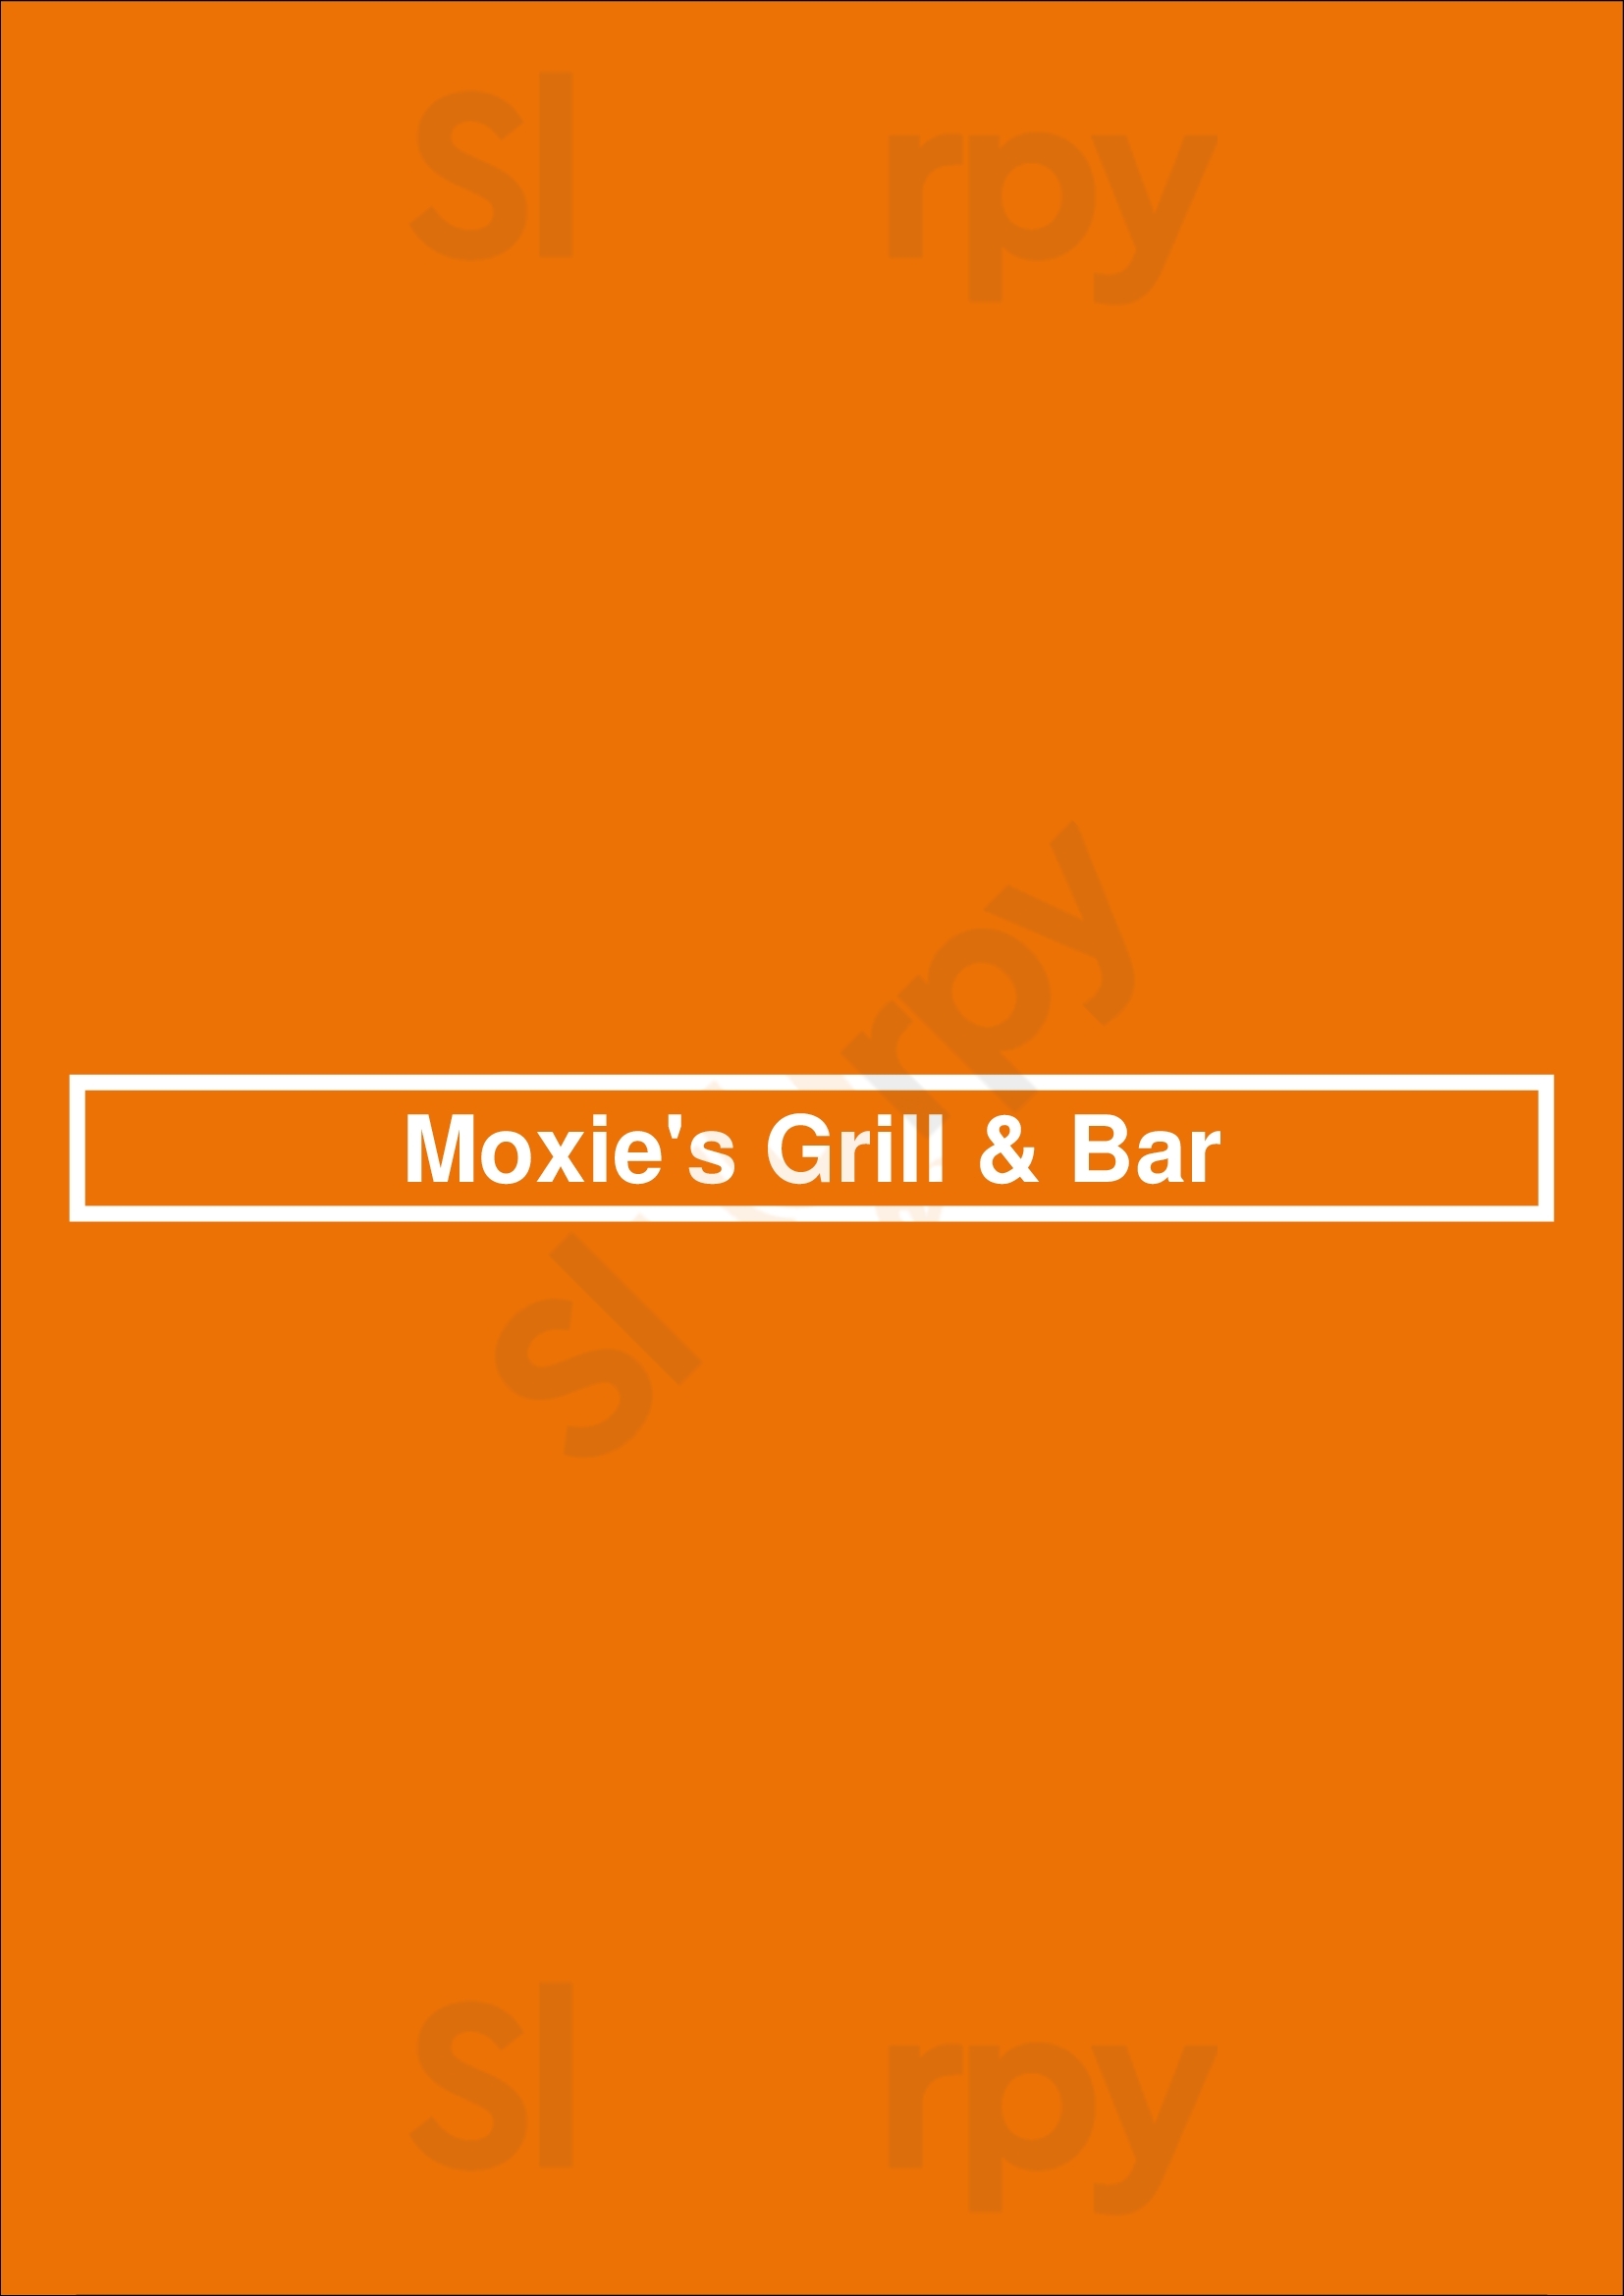 Moxie's Grill & Bar Fort McMurray Menu - 1